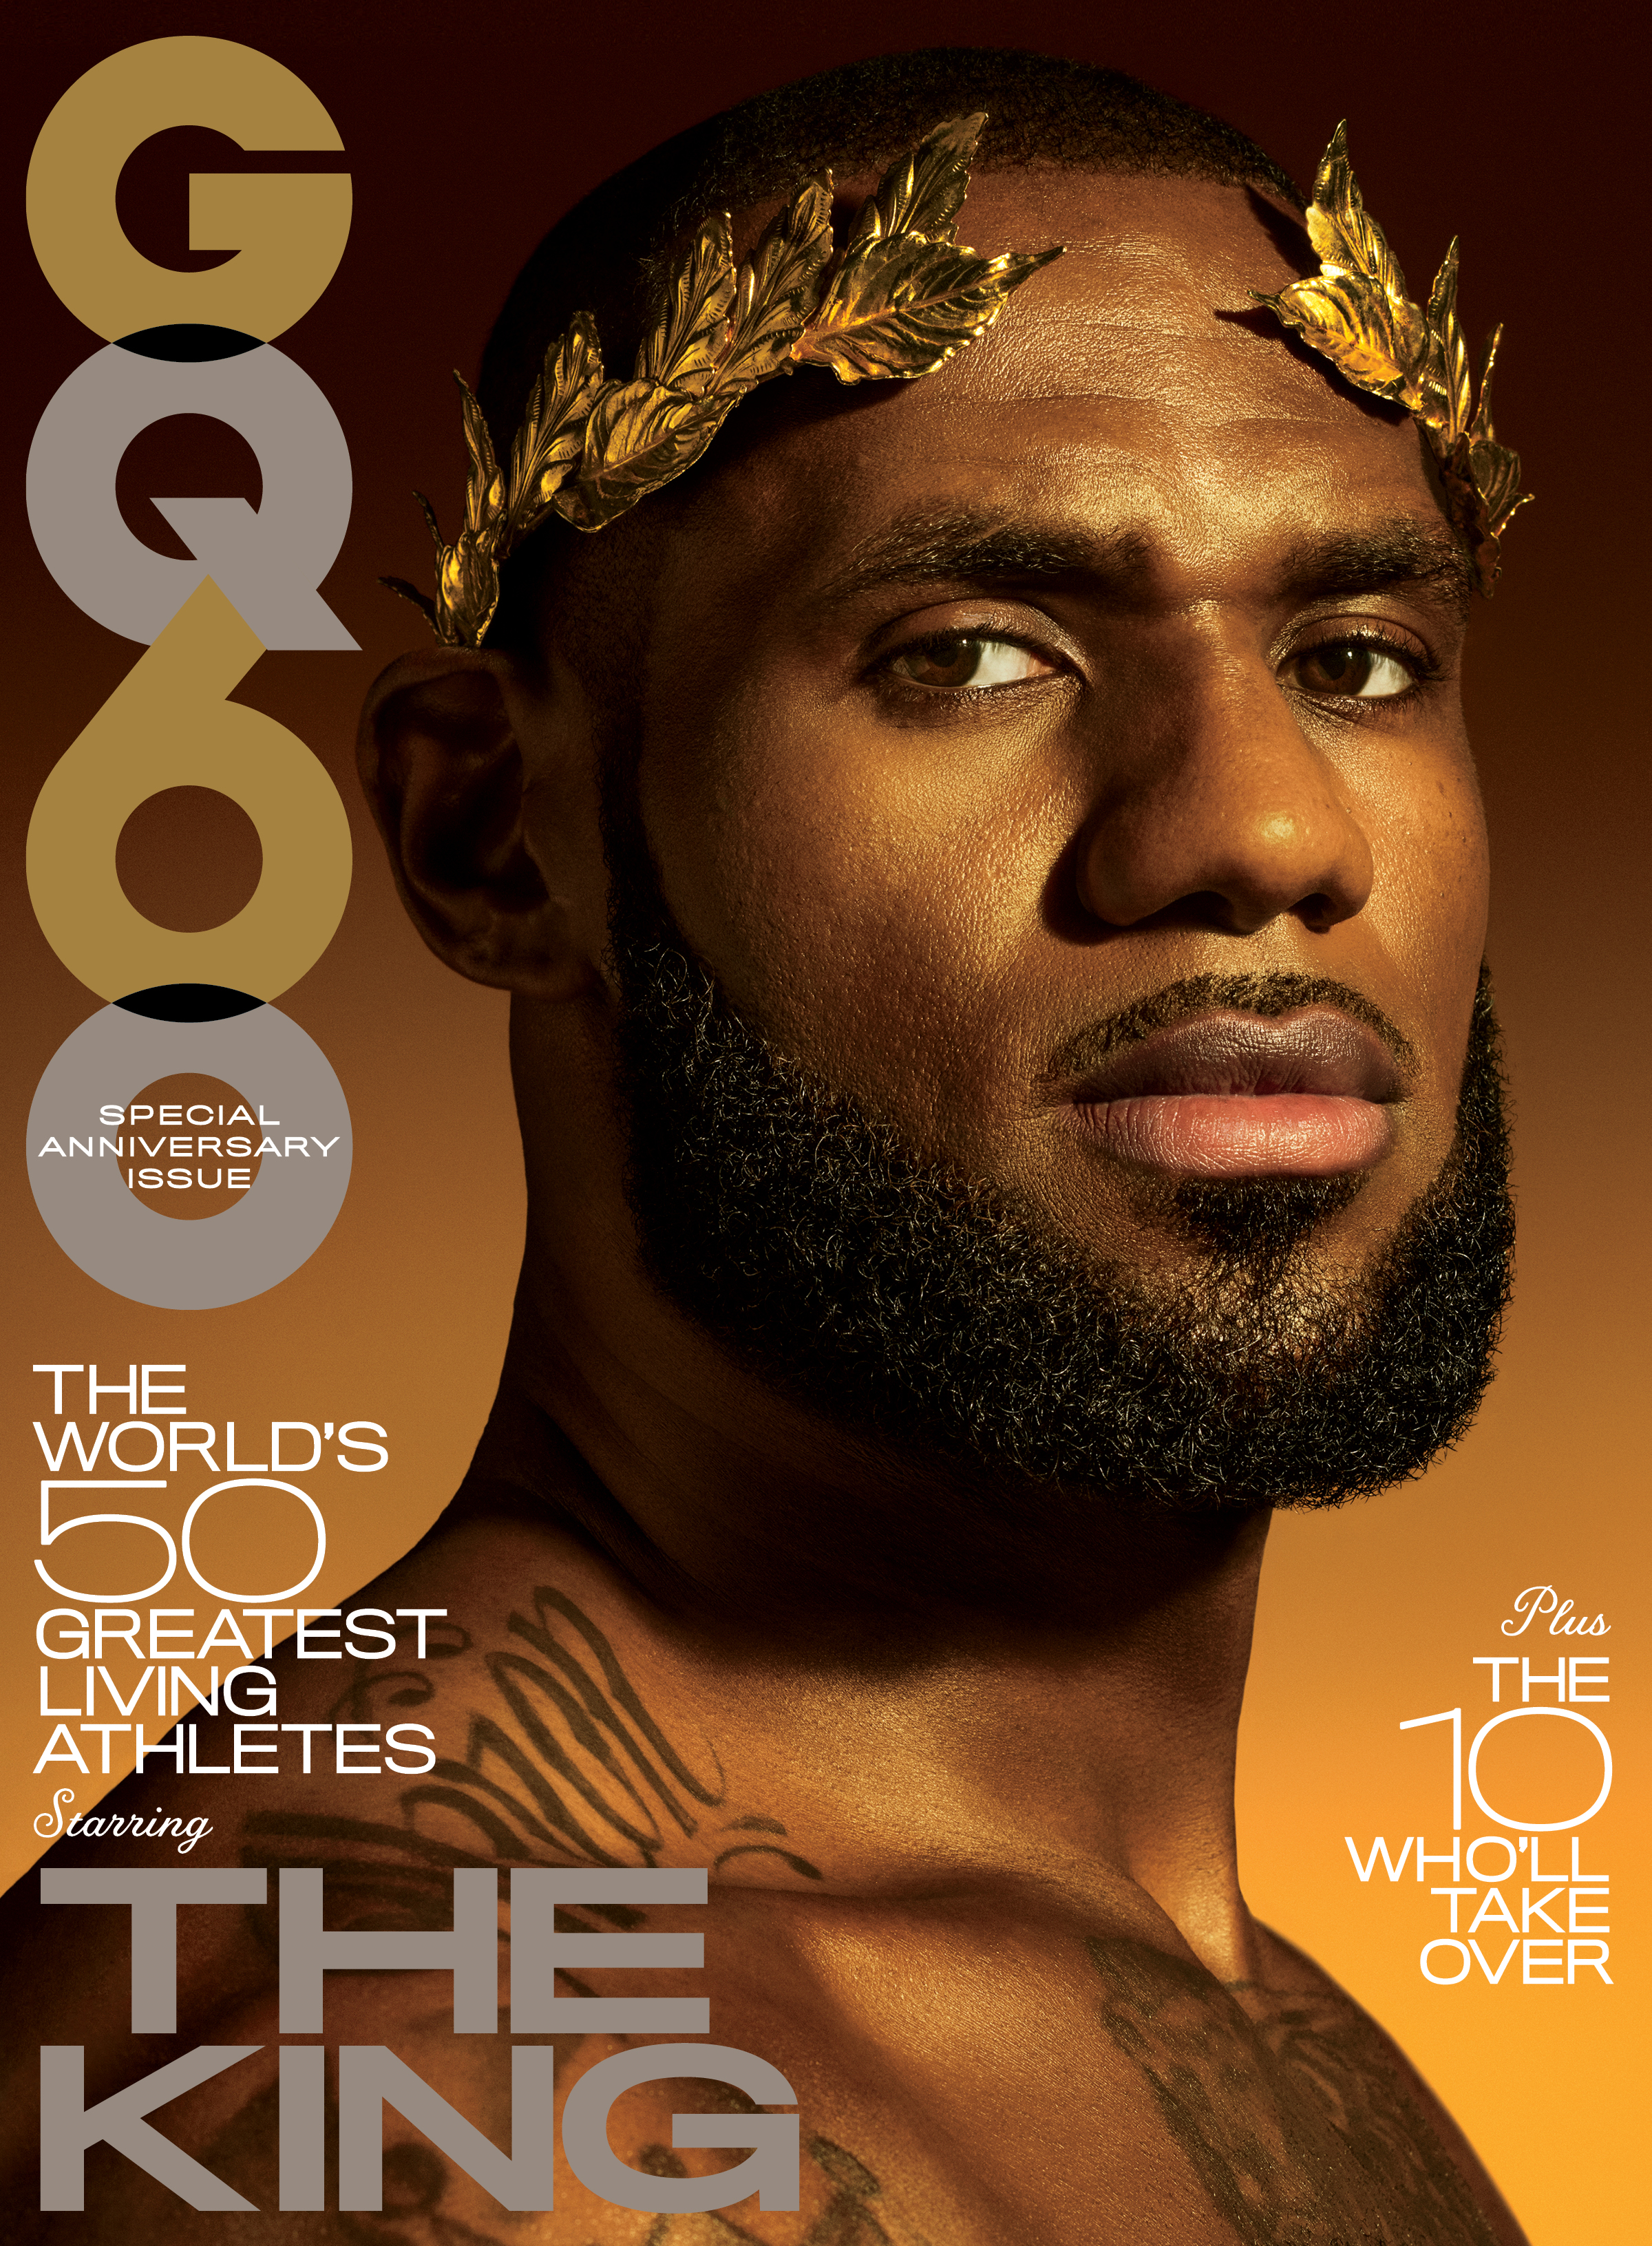 GQ - "The World's 50 Greatest Living Athletes," November 2017